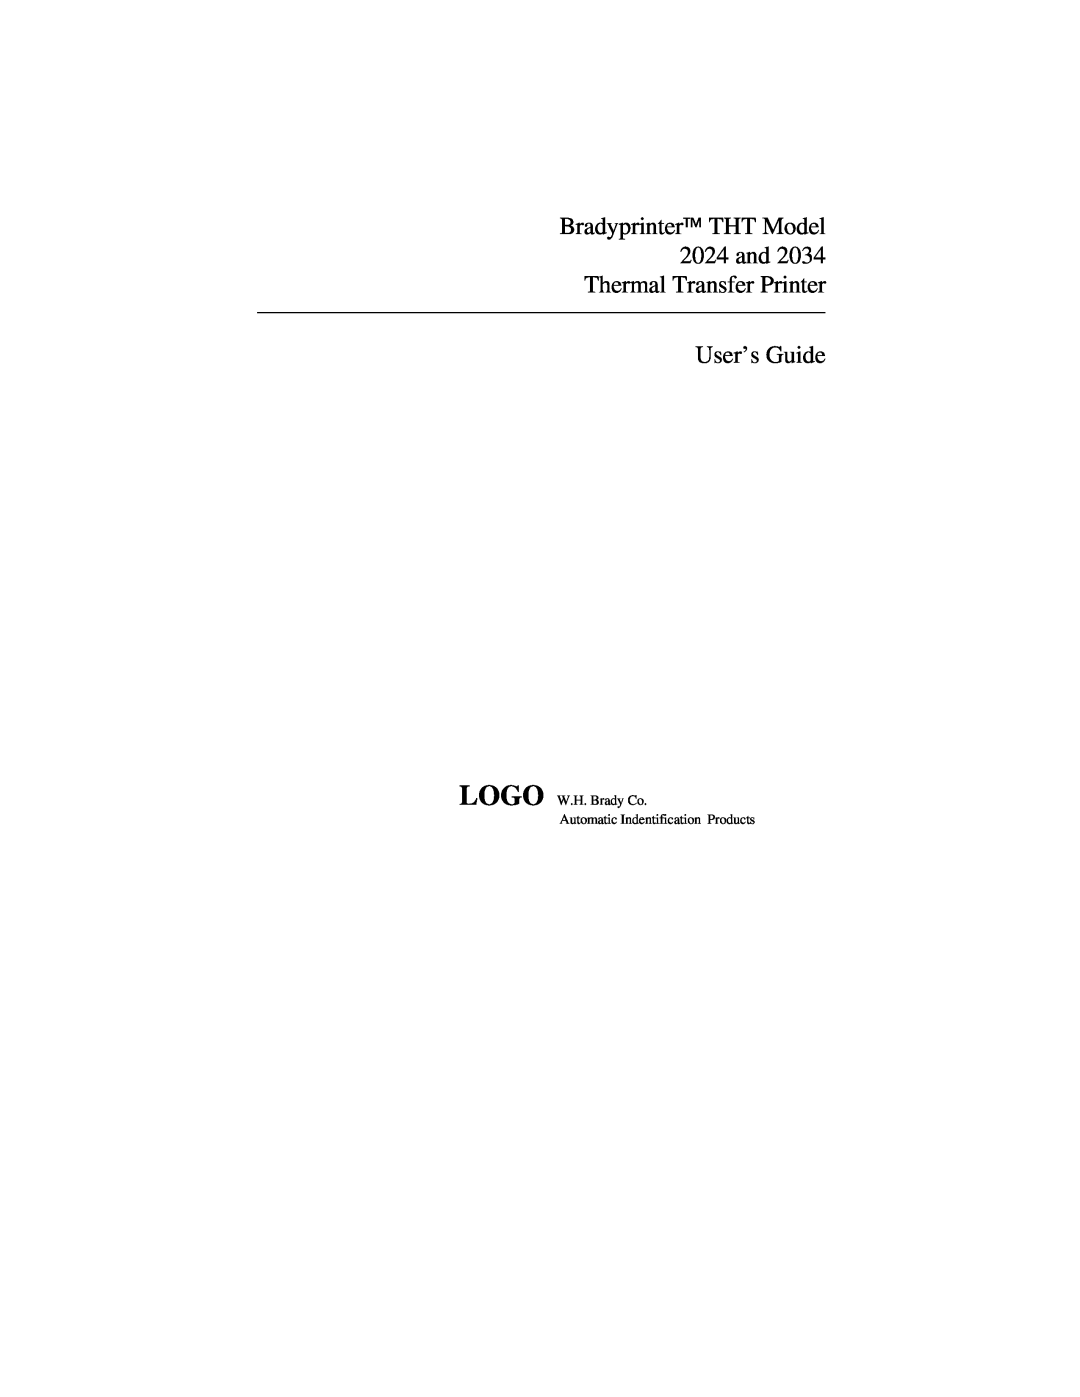 Brady 2034 manual Bradyprinterä THT Model 2024 and Thermal Transfer Printer, User’s Guide 